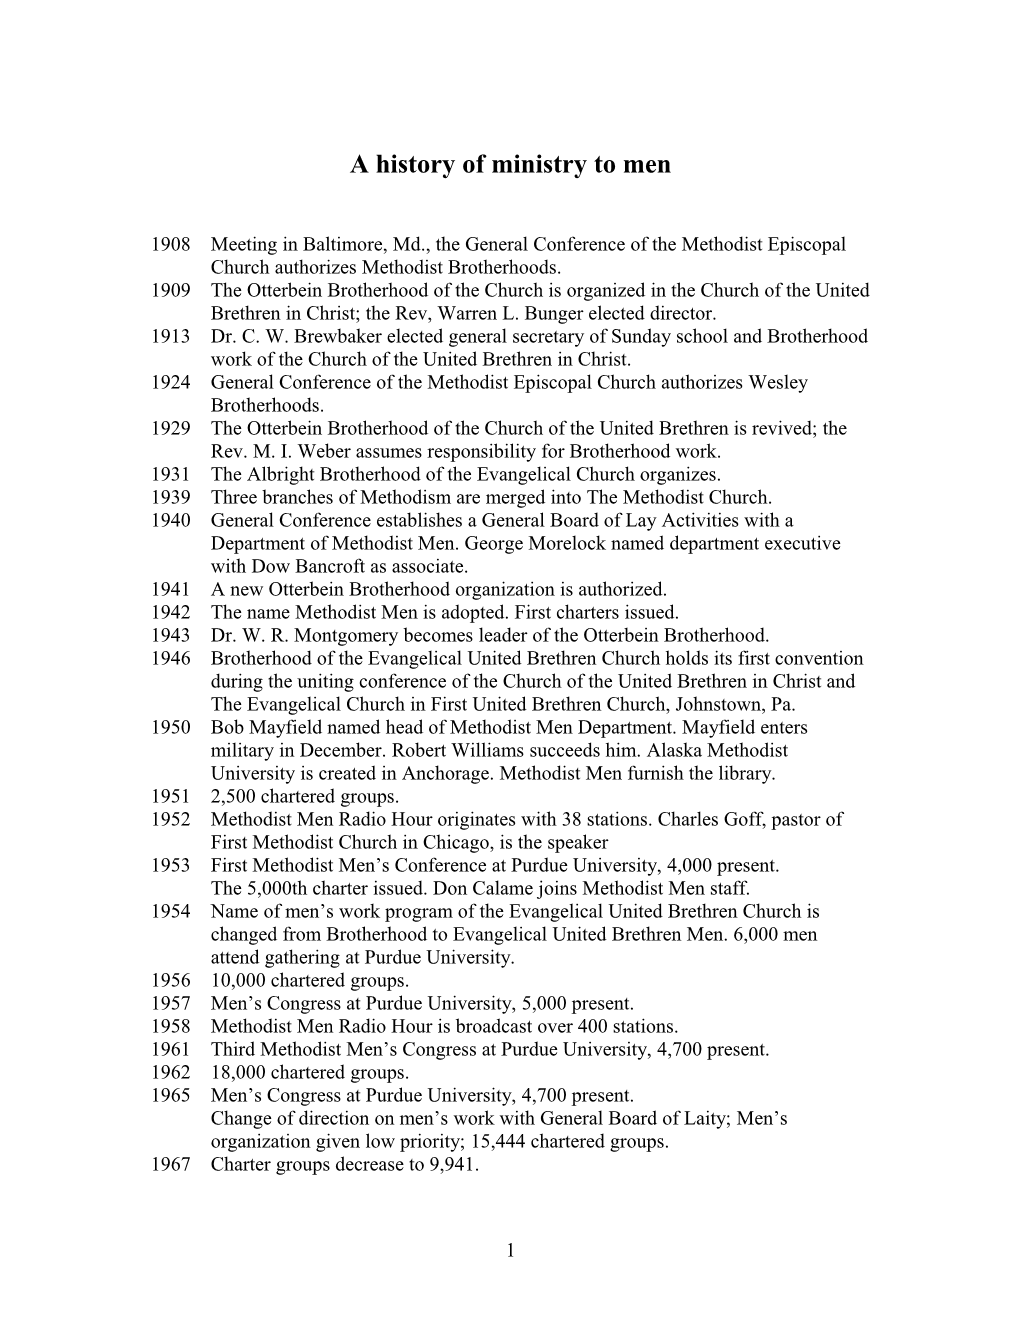 A Chronology of Methodist Men S Ministry